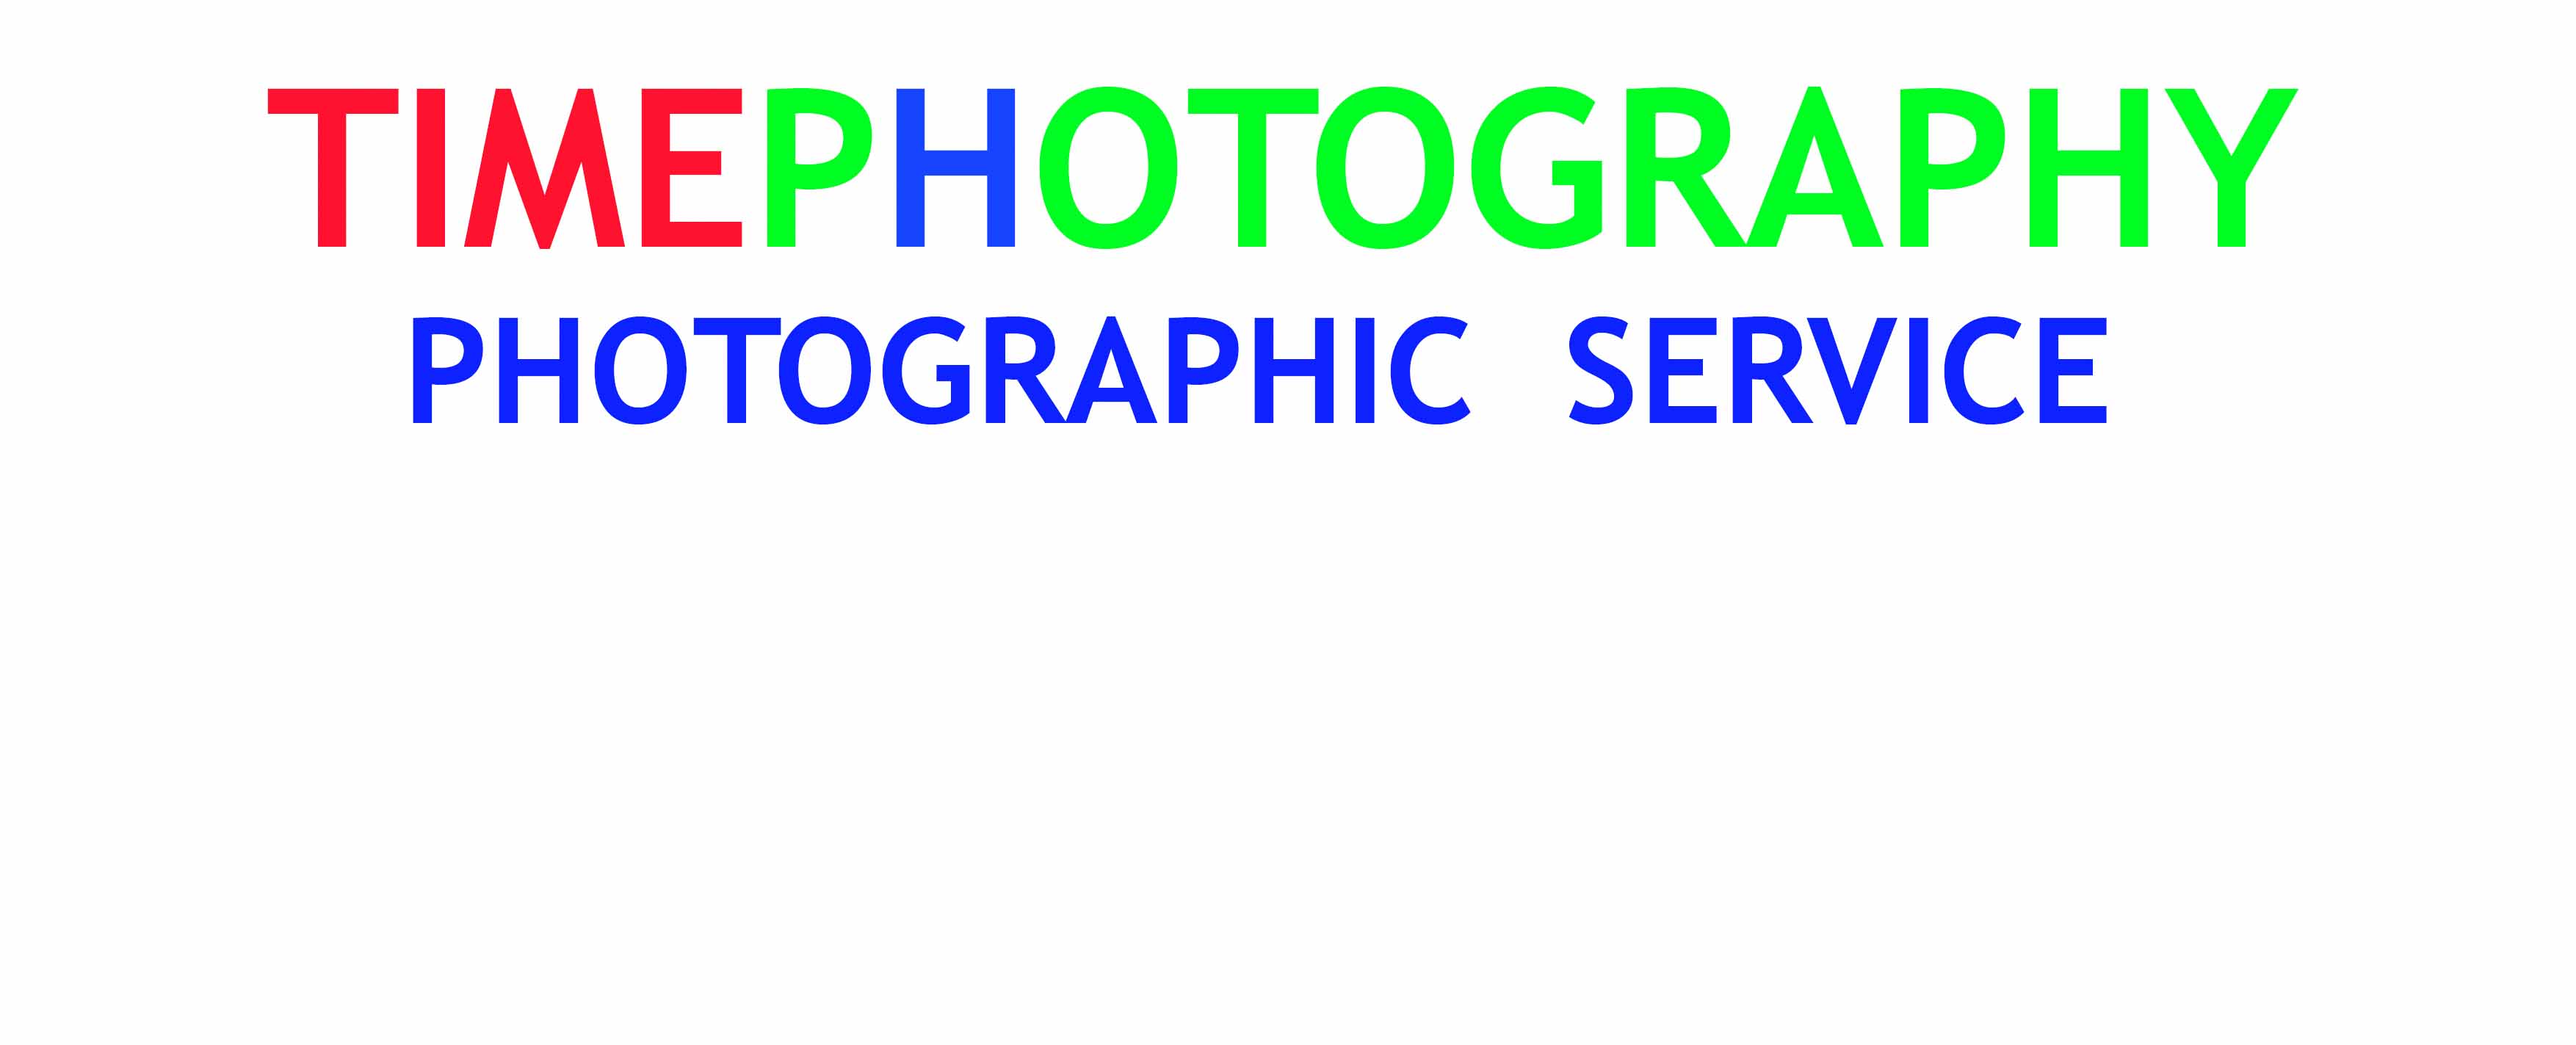 oglasi, Hotel Photographer 2015